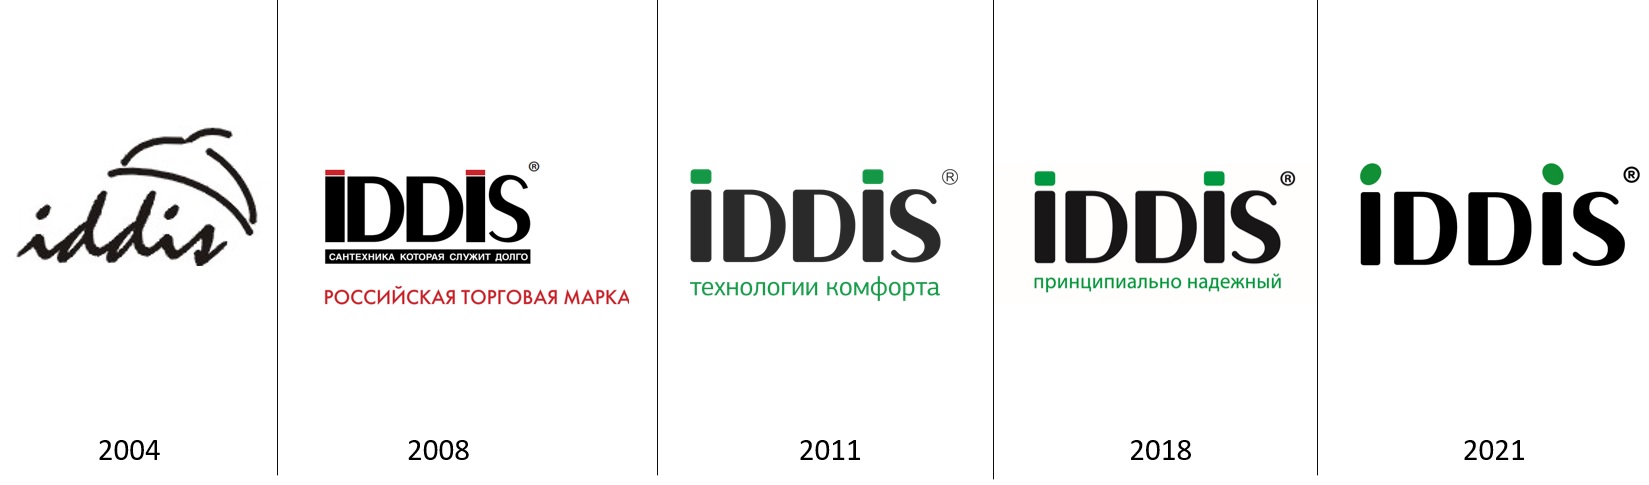 Iddis сантехника сайт. Сантехника IDDIS логотип. IDDIS SKL logo. IDDIS упаковка. IDDIS Official Store.